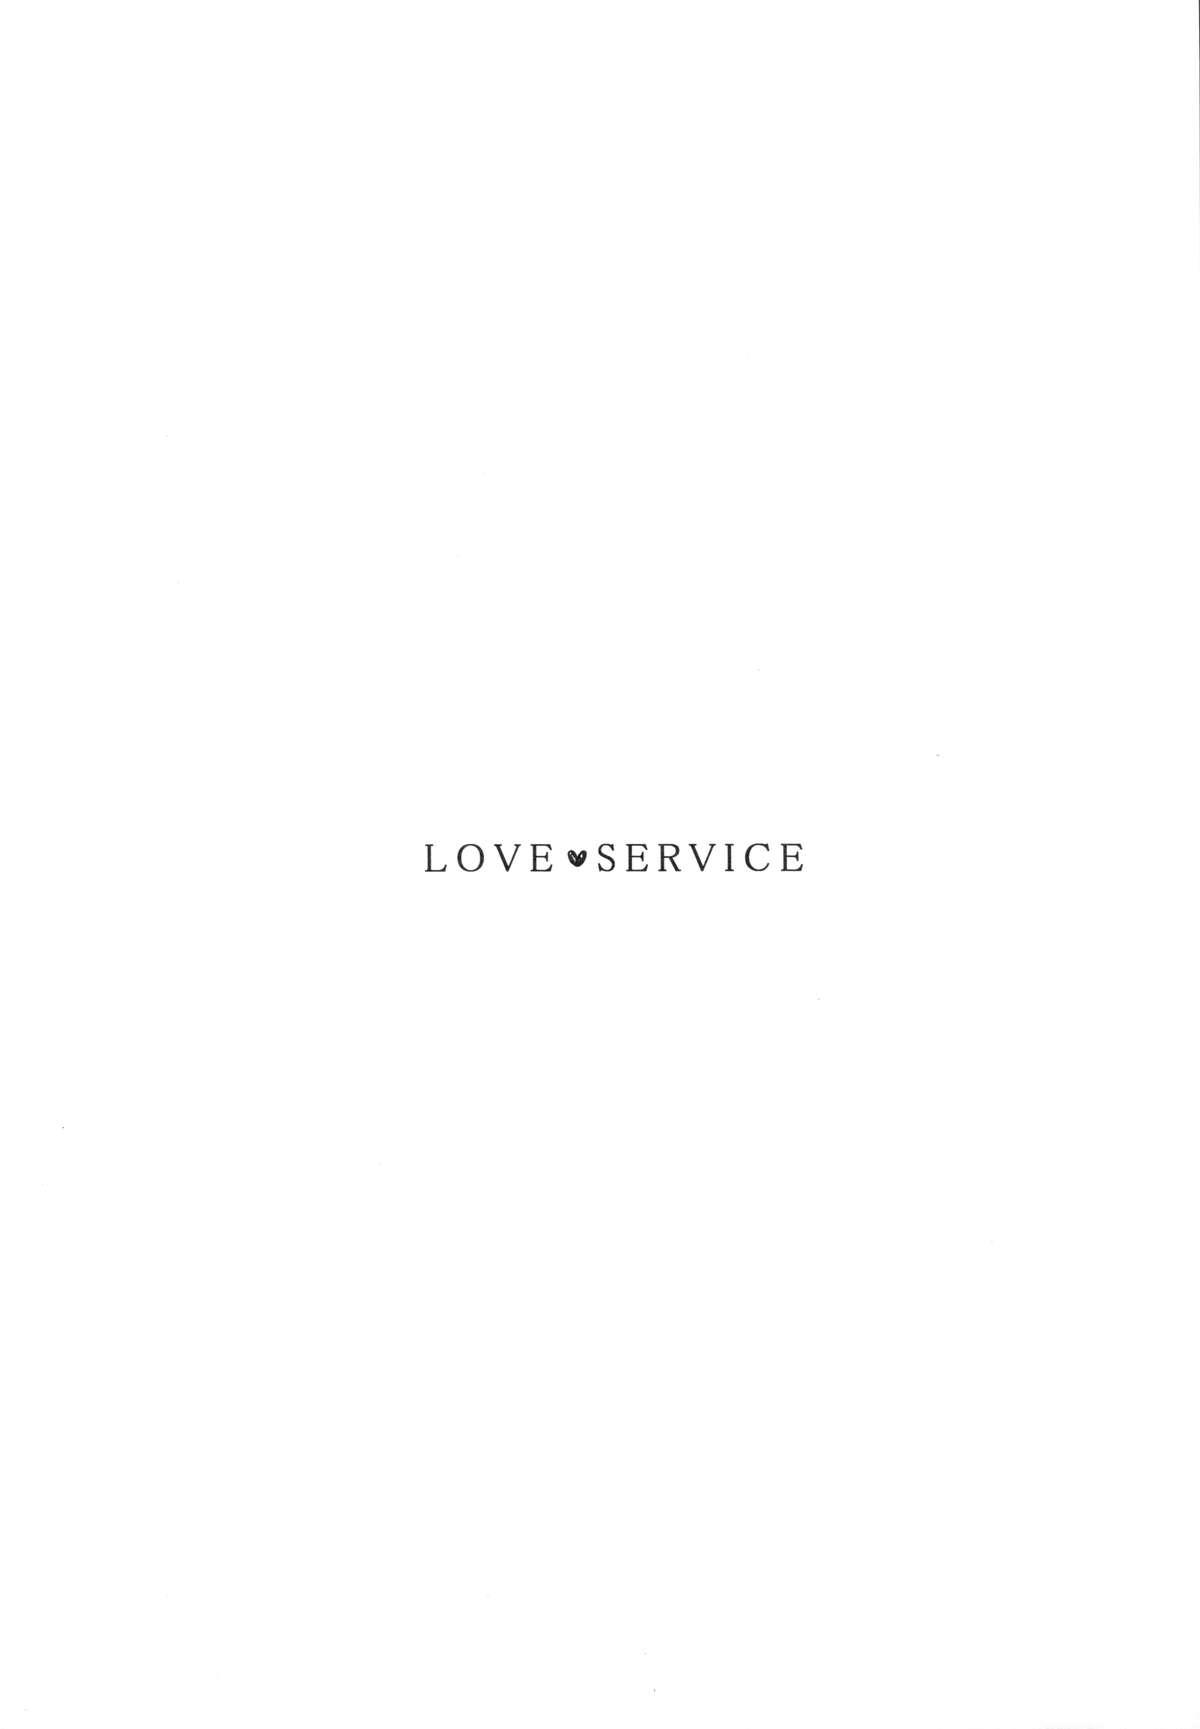 Love service 2